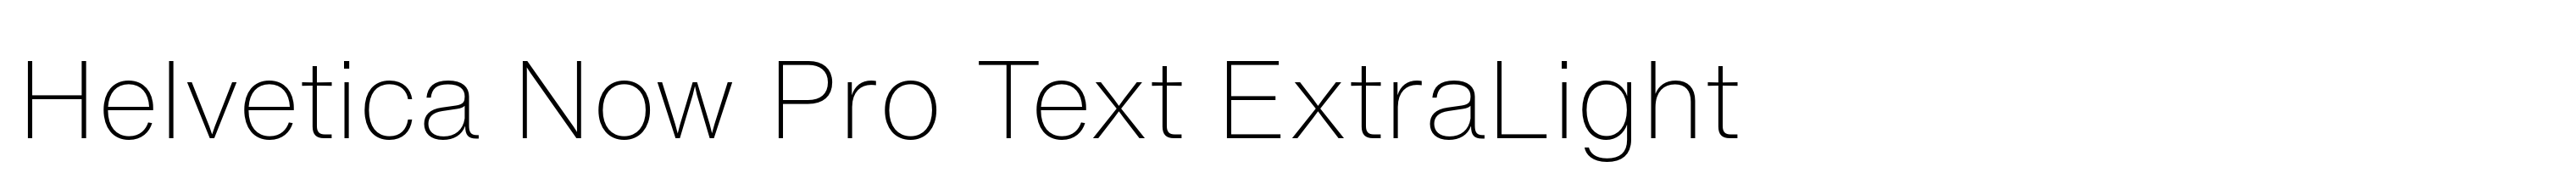 Helvetica Now Pro Text ExtraLight